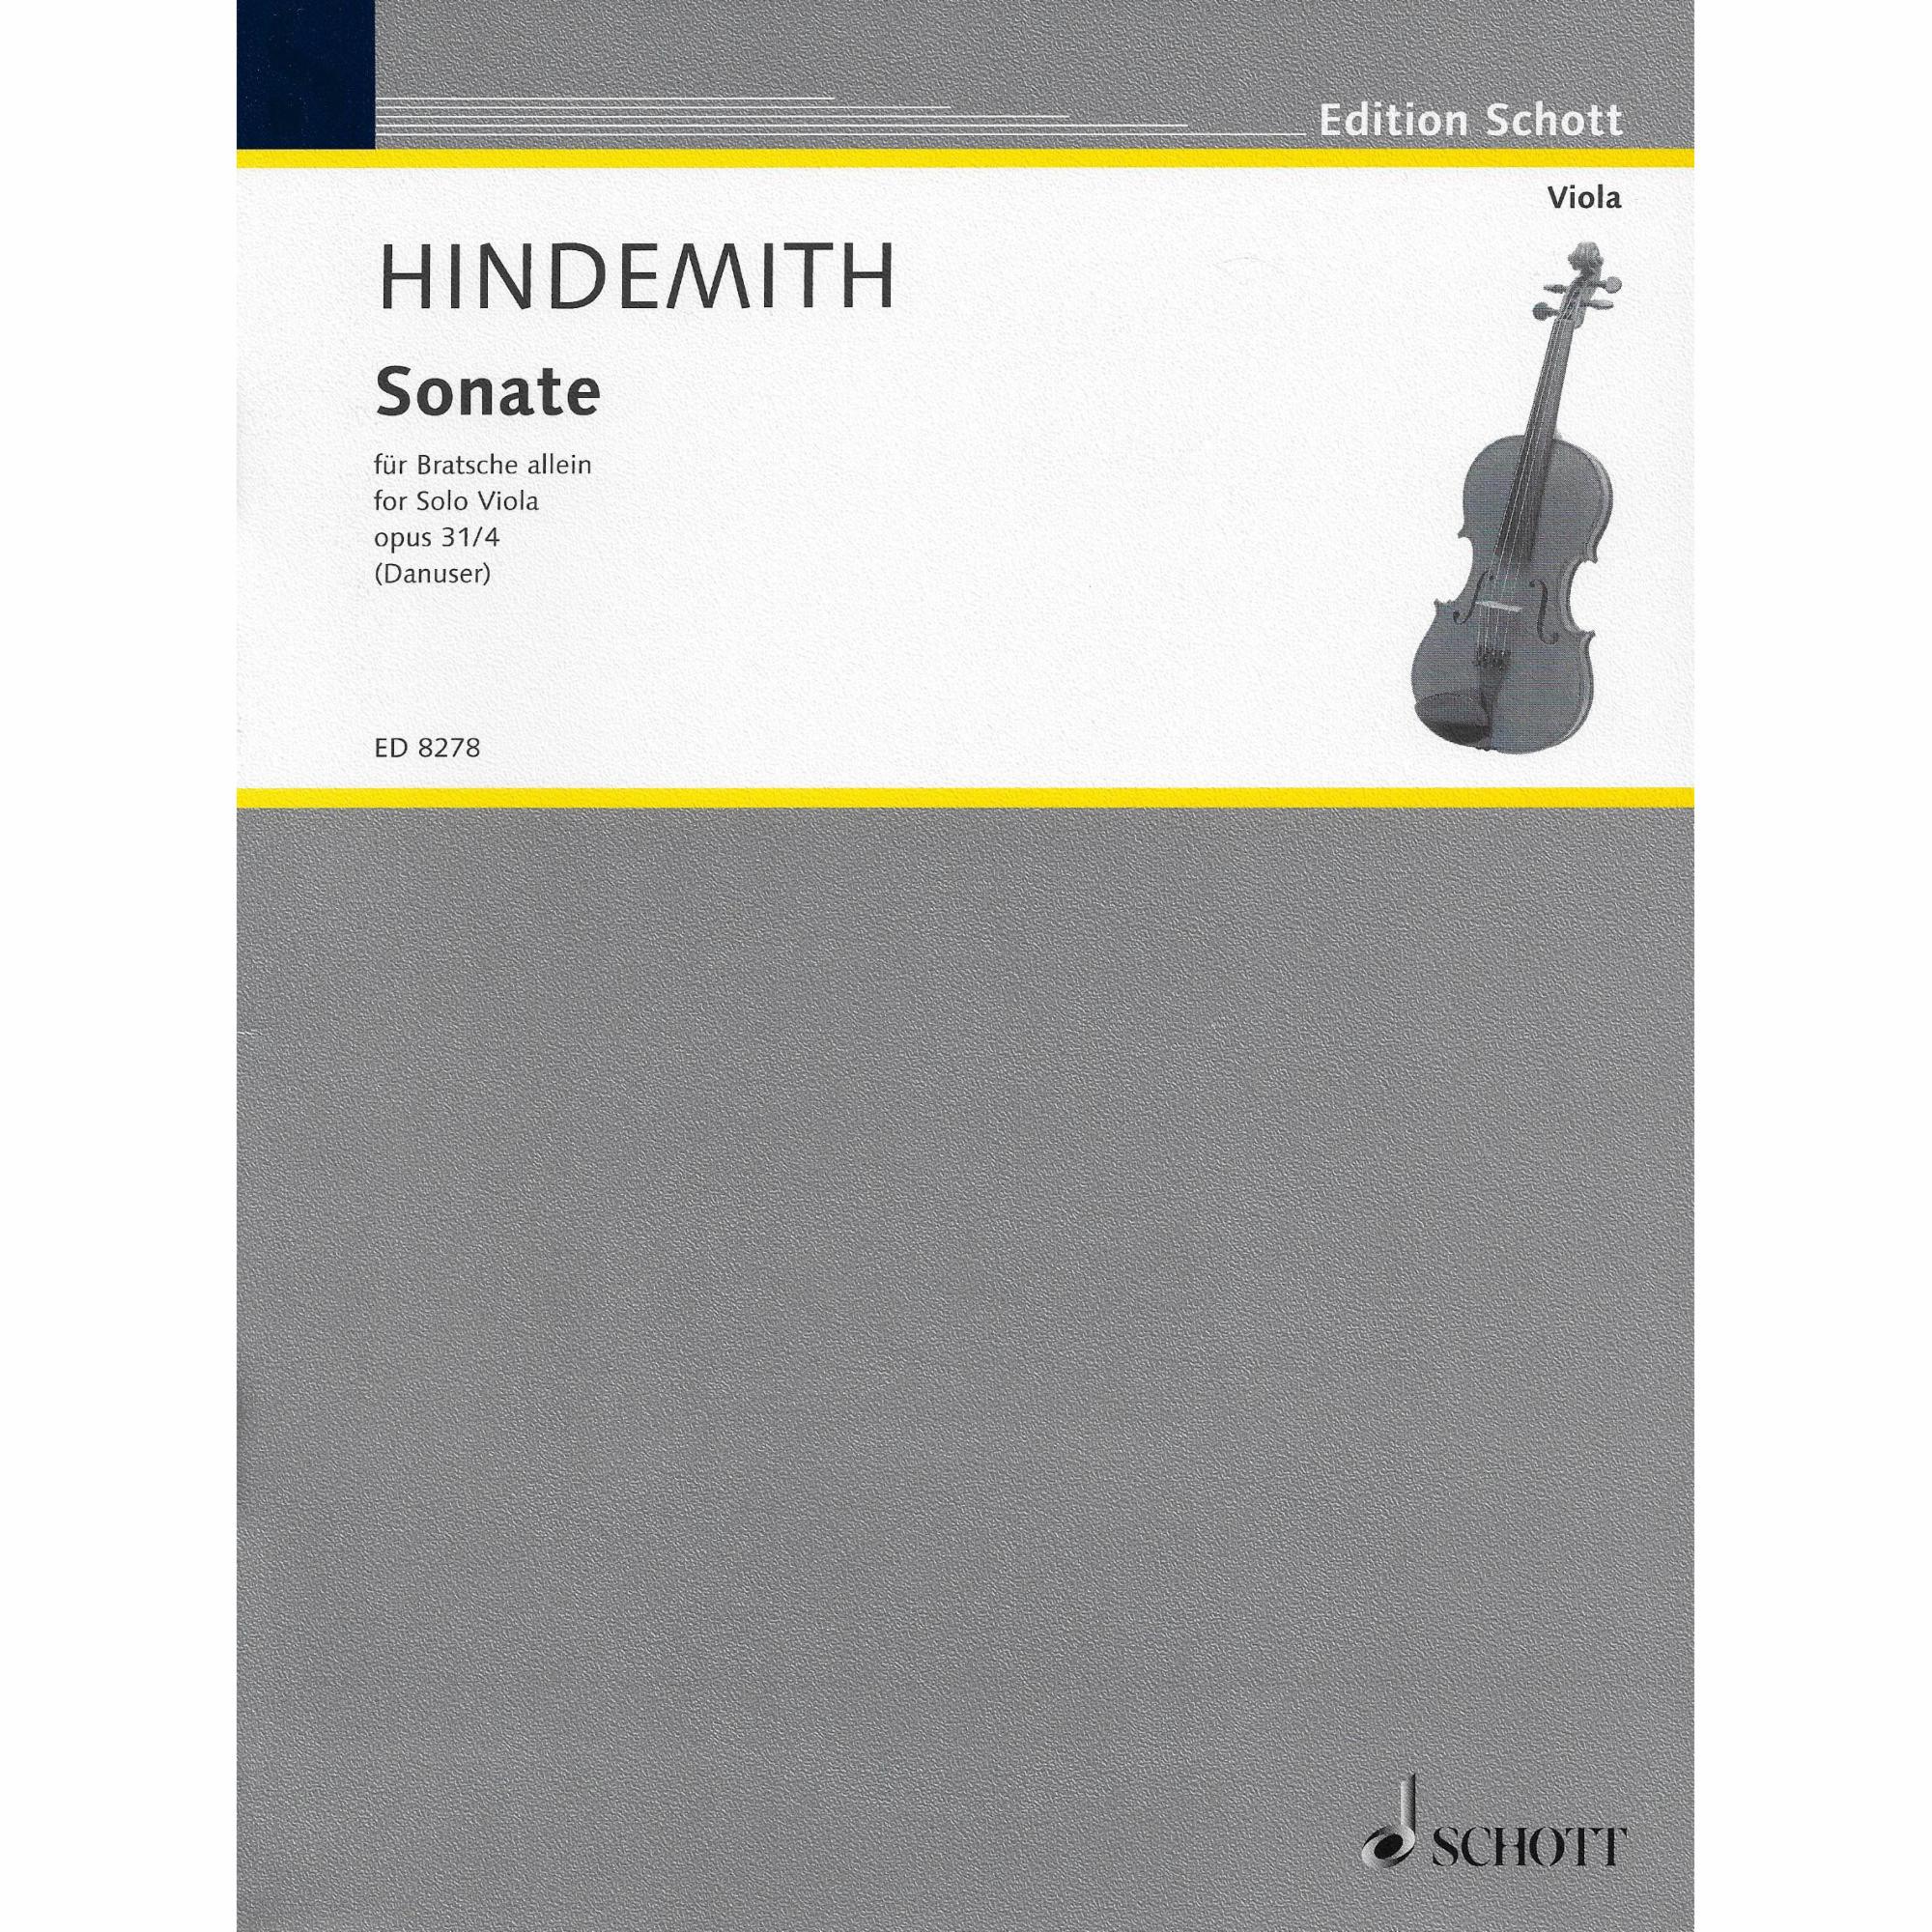 Hindemith -- Sonata, Op. 31/4 for Solo Viola